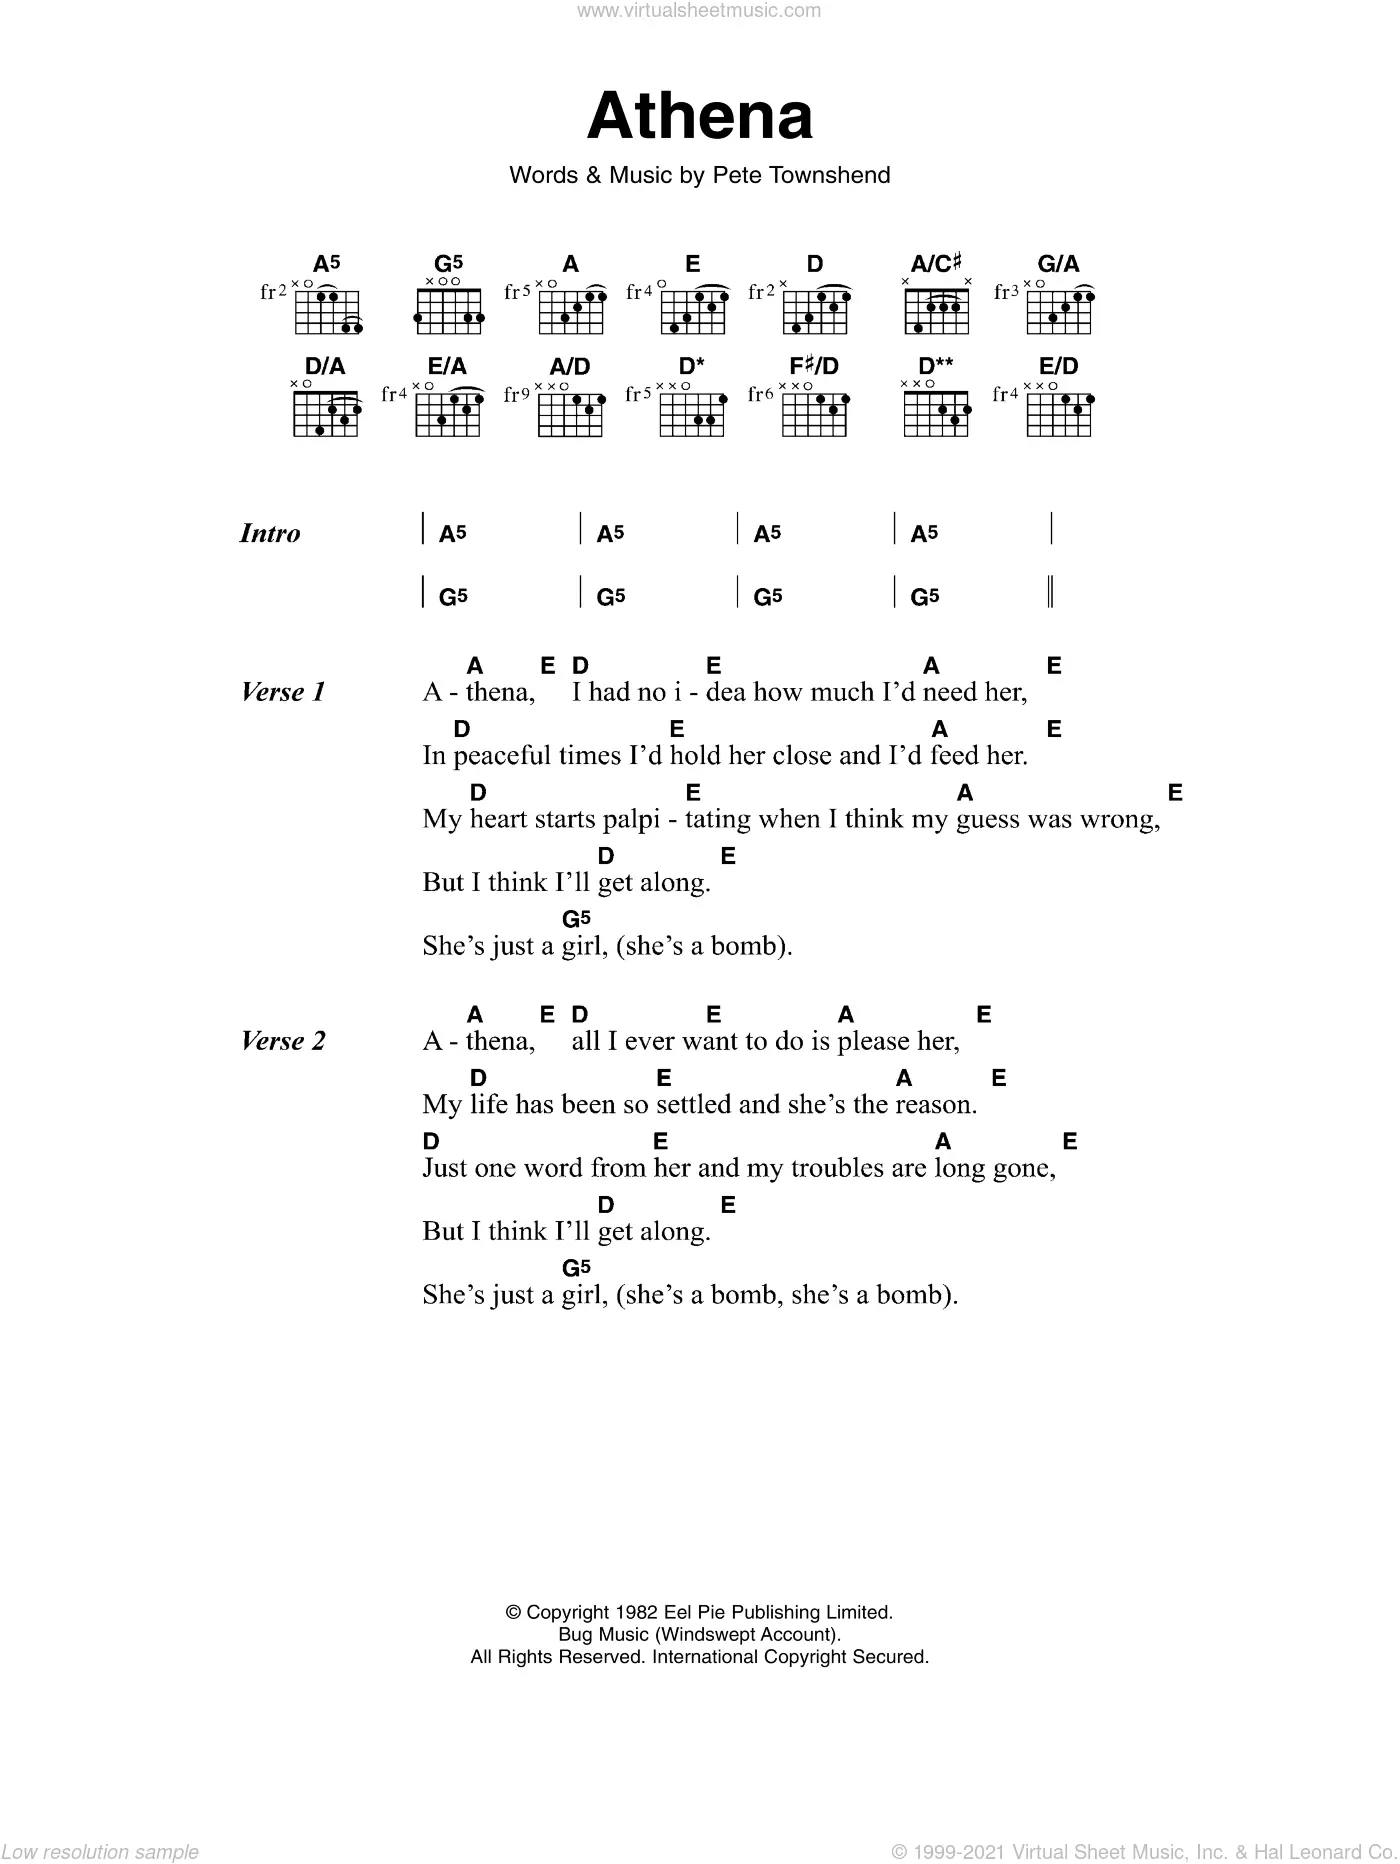 The Who 'Pinball Wizard' Sheet Music, Chords & Lyrics